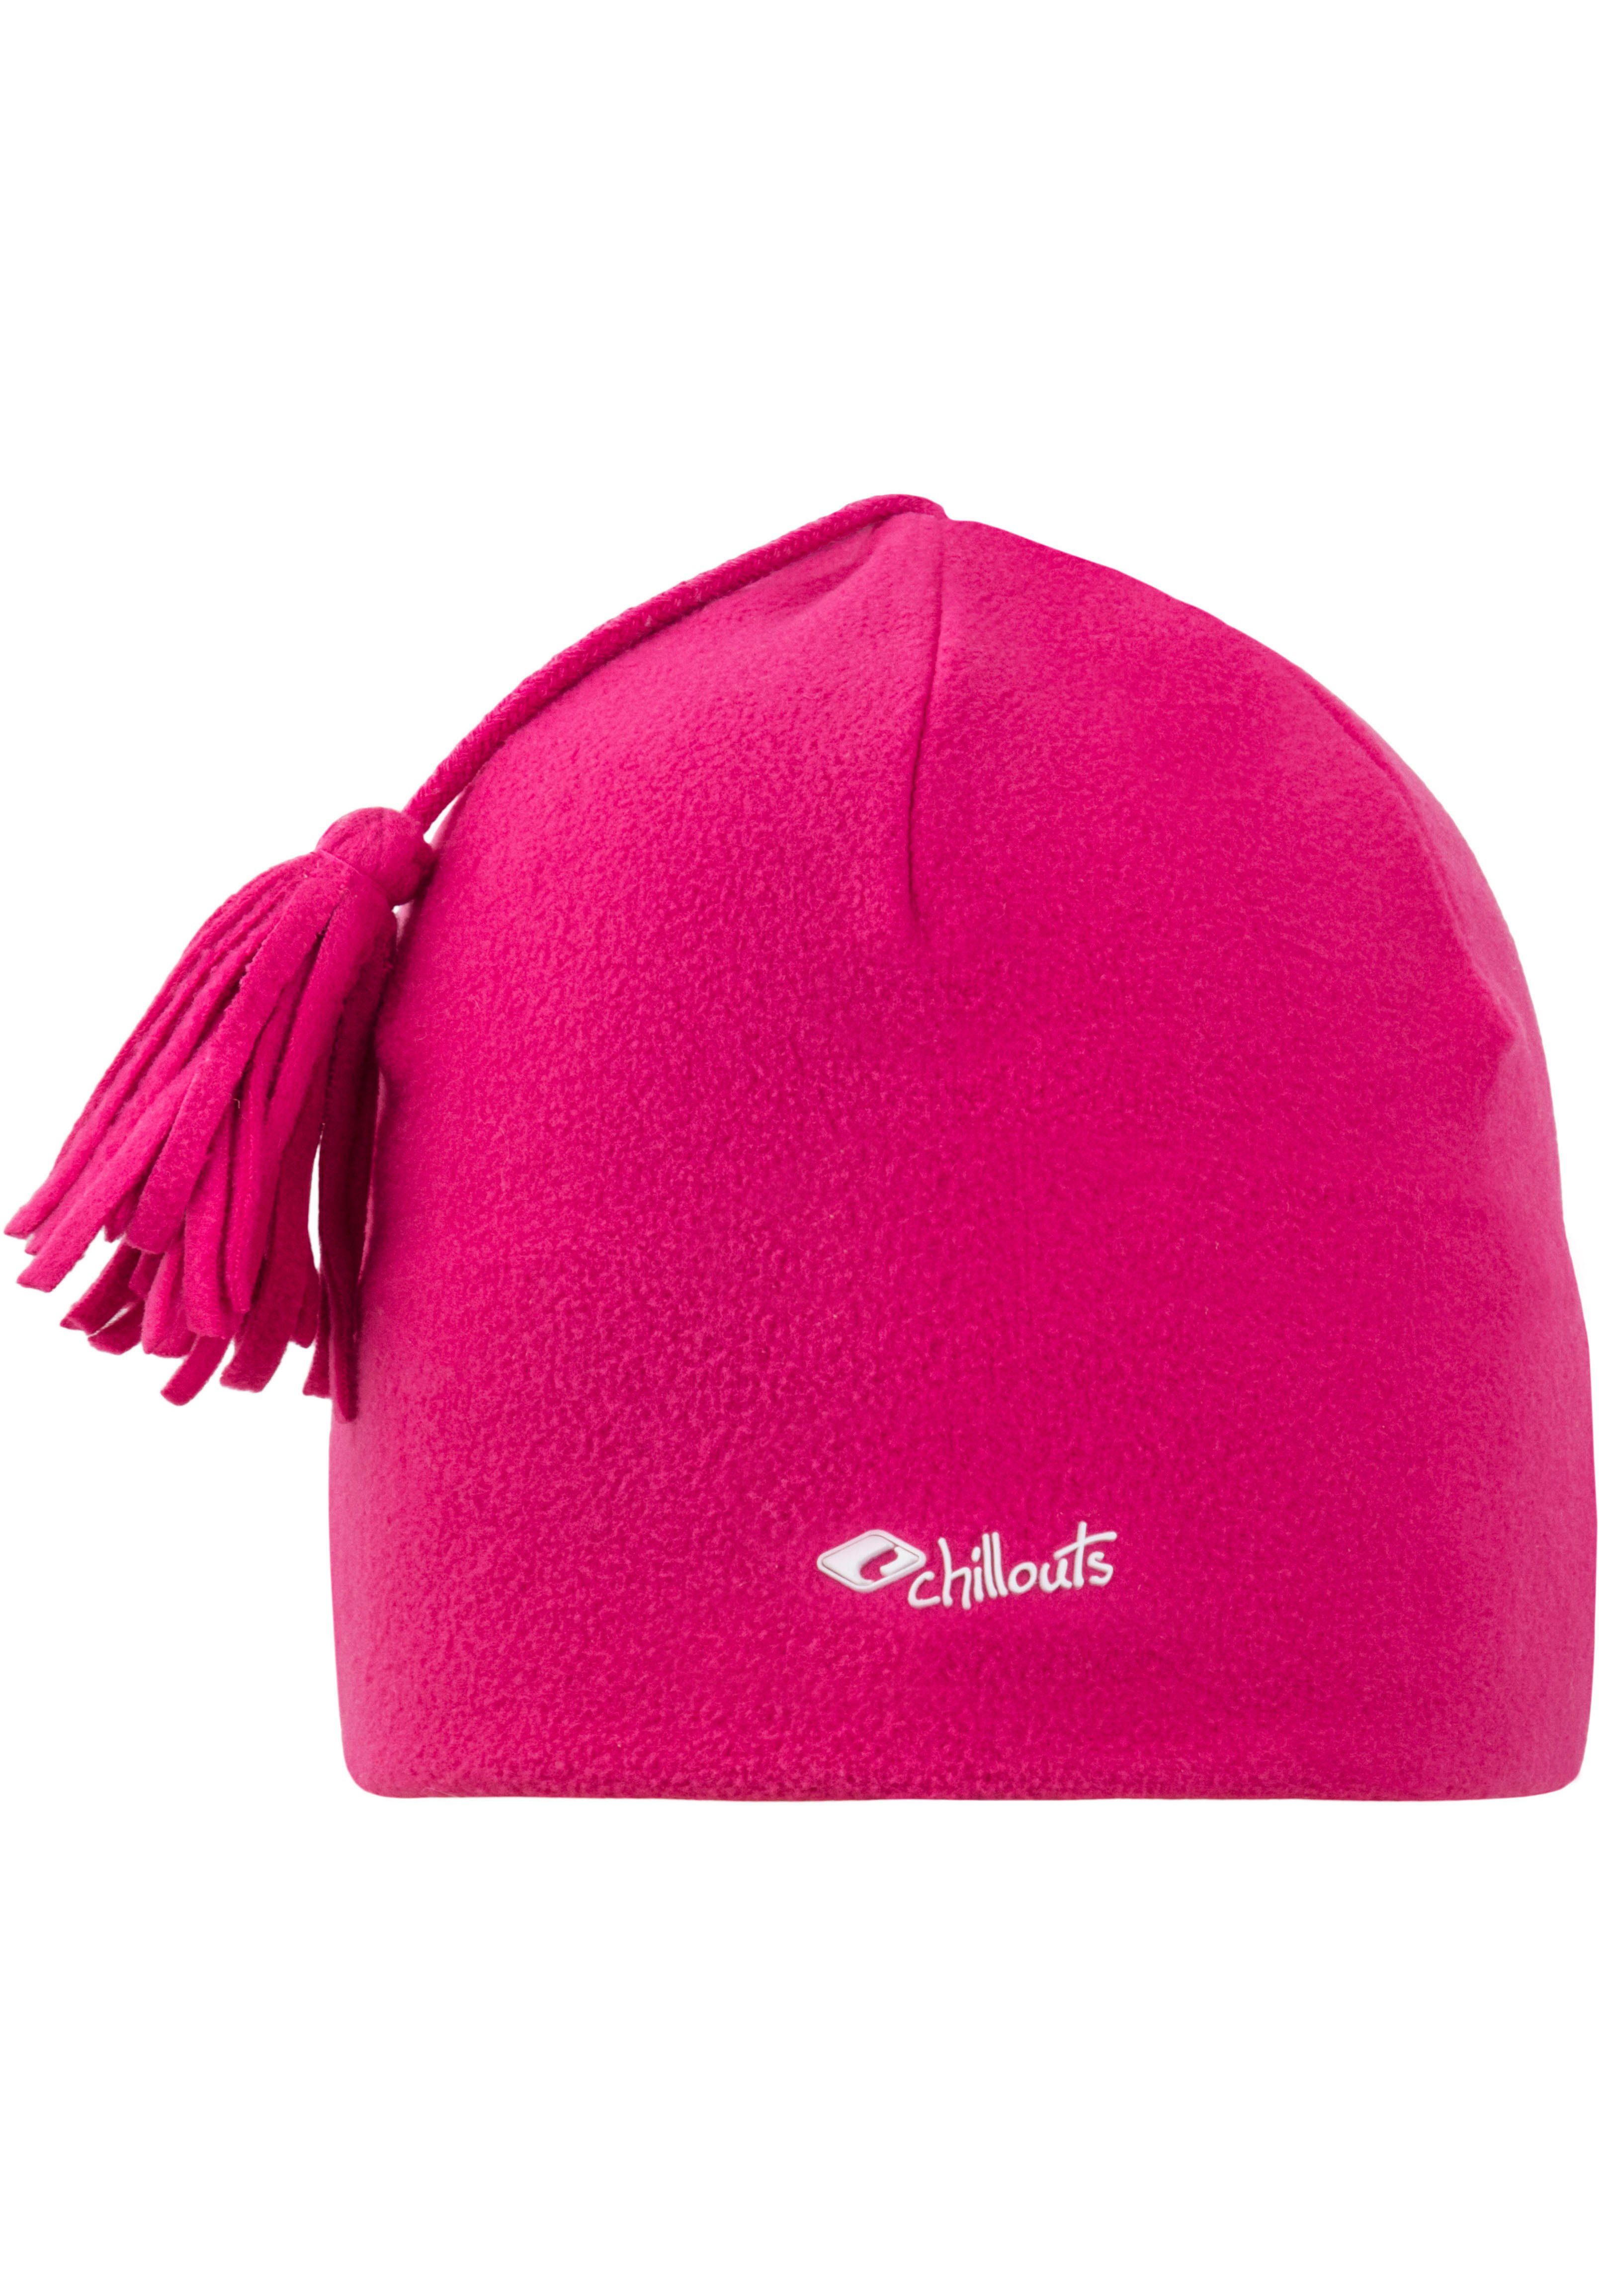 Fleece Pom chillouts Freeze pink Fleecemütze Hat